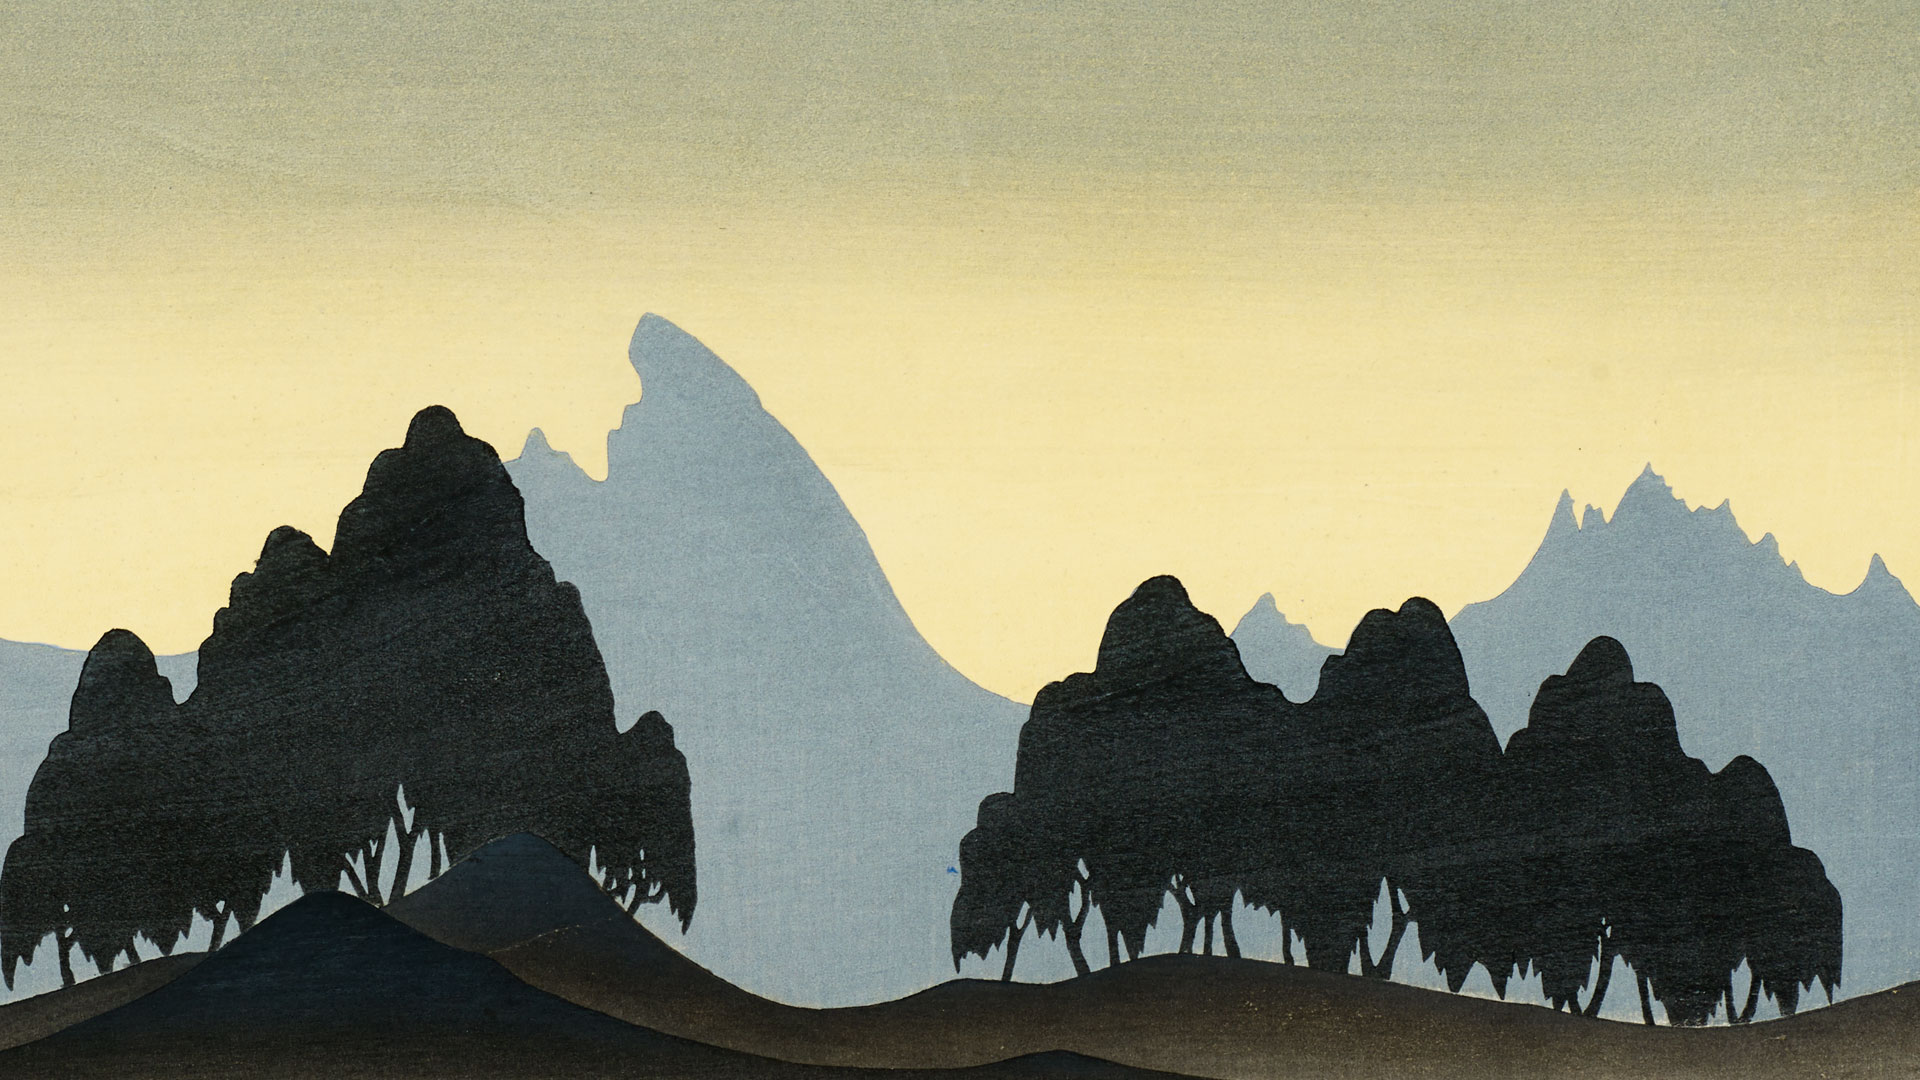 Woodcut print of a scenic landscape in Korea